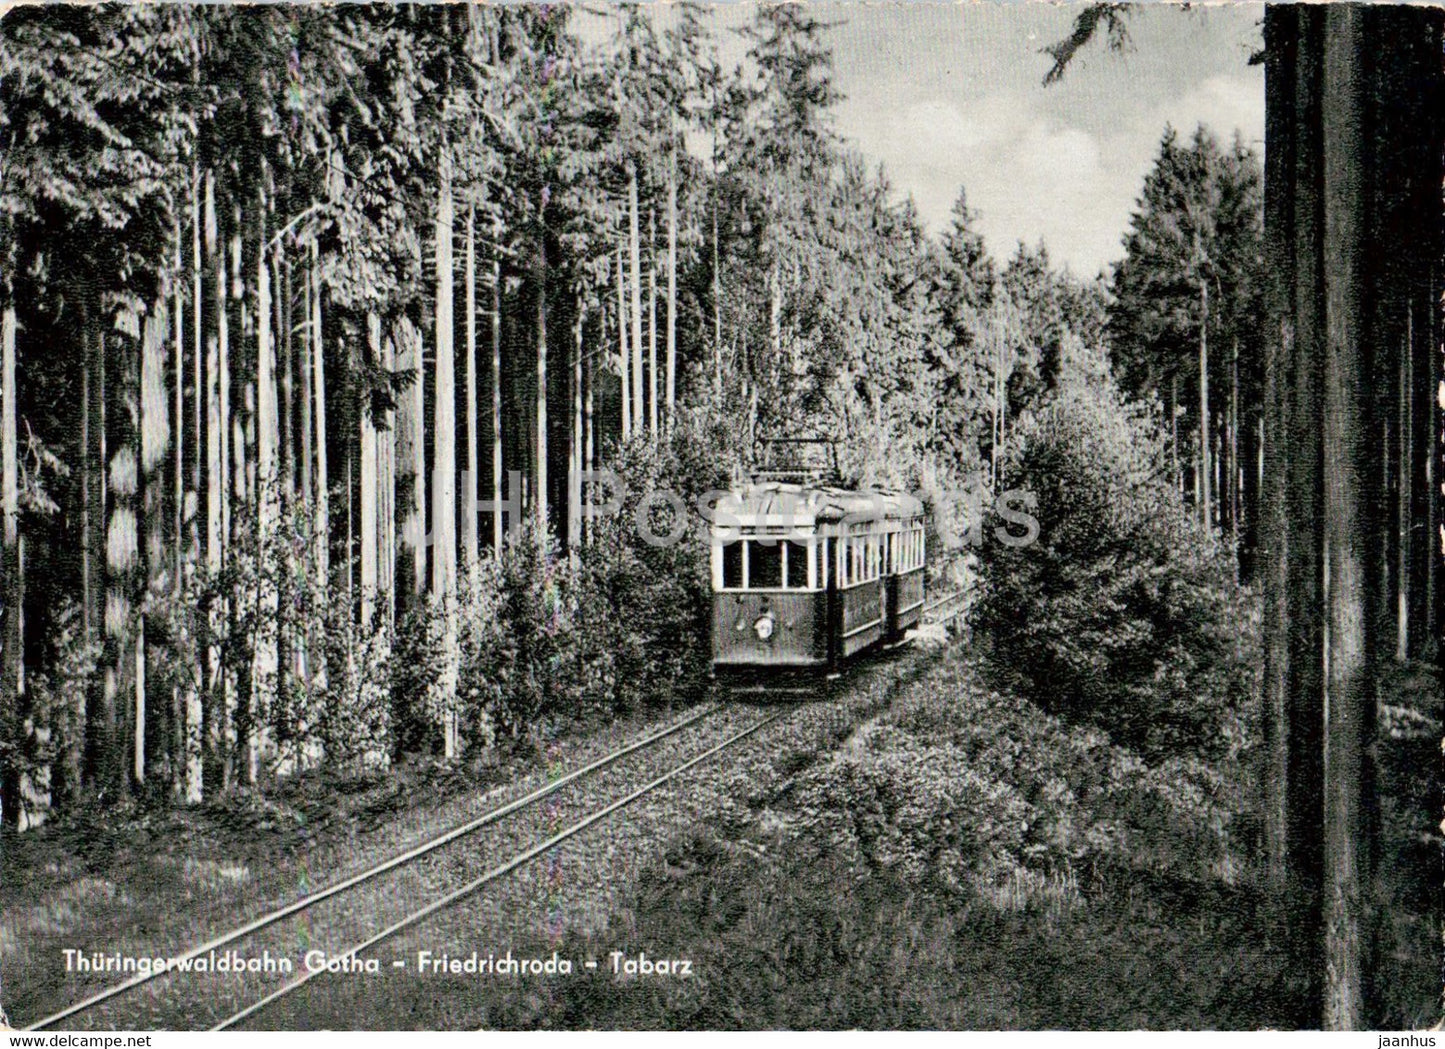 Thuringer Waldbahn Gotha Friedrichroda Tabarz - tram - old postcards - Germany - unused - JH Postcards